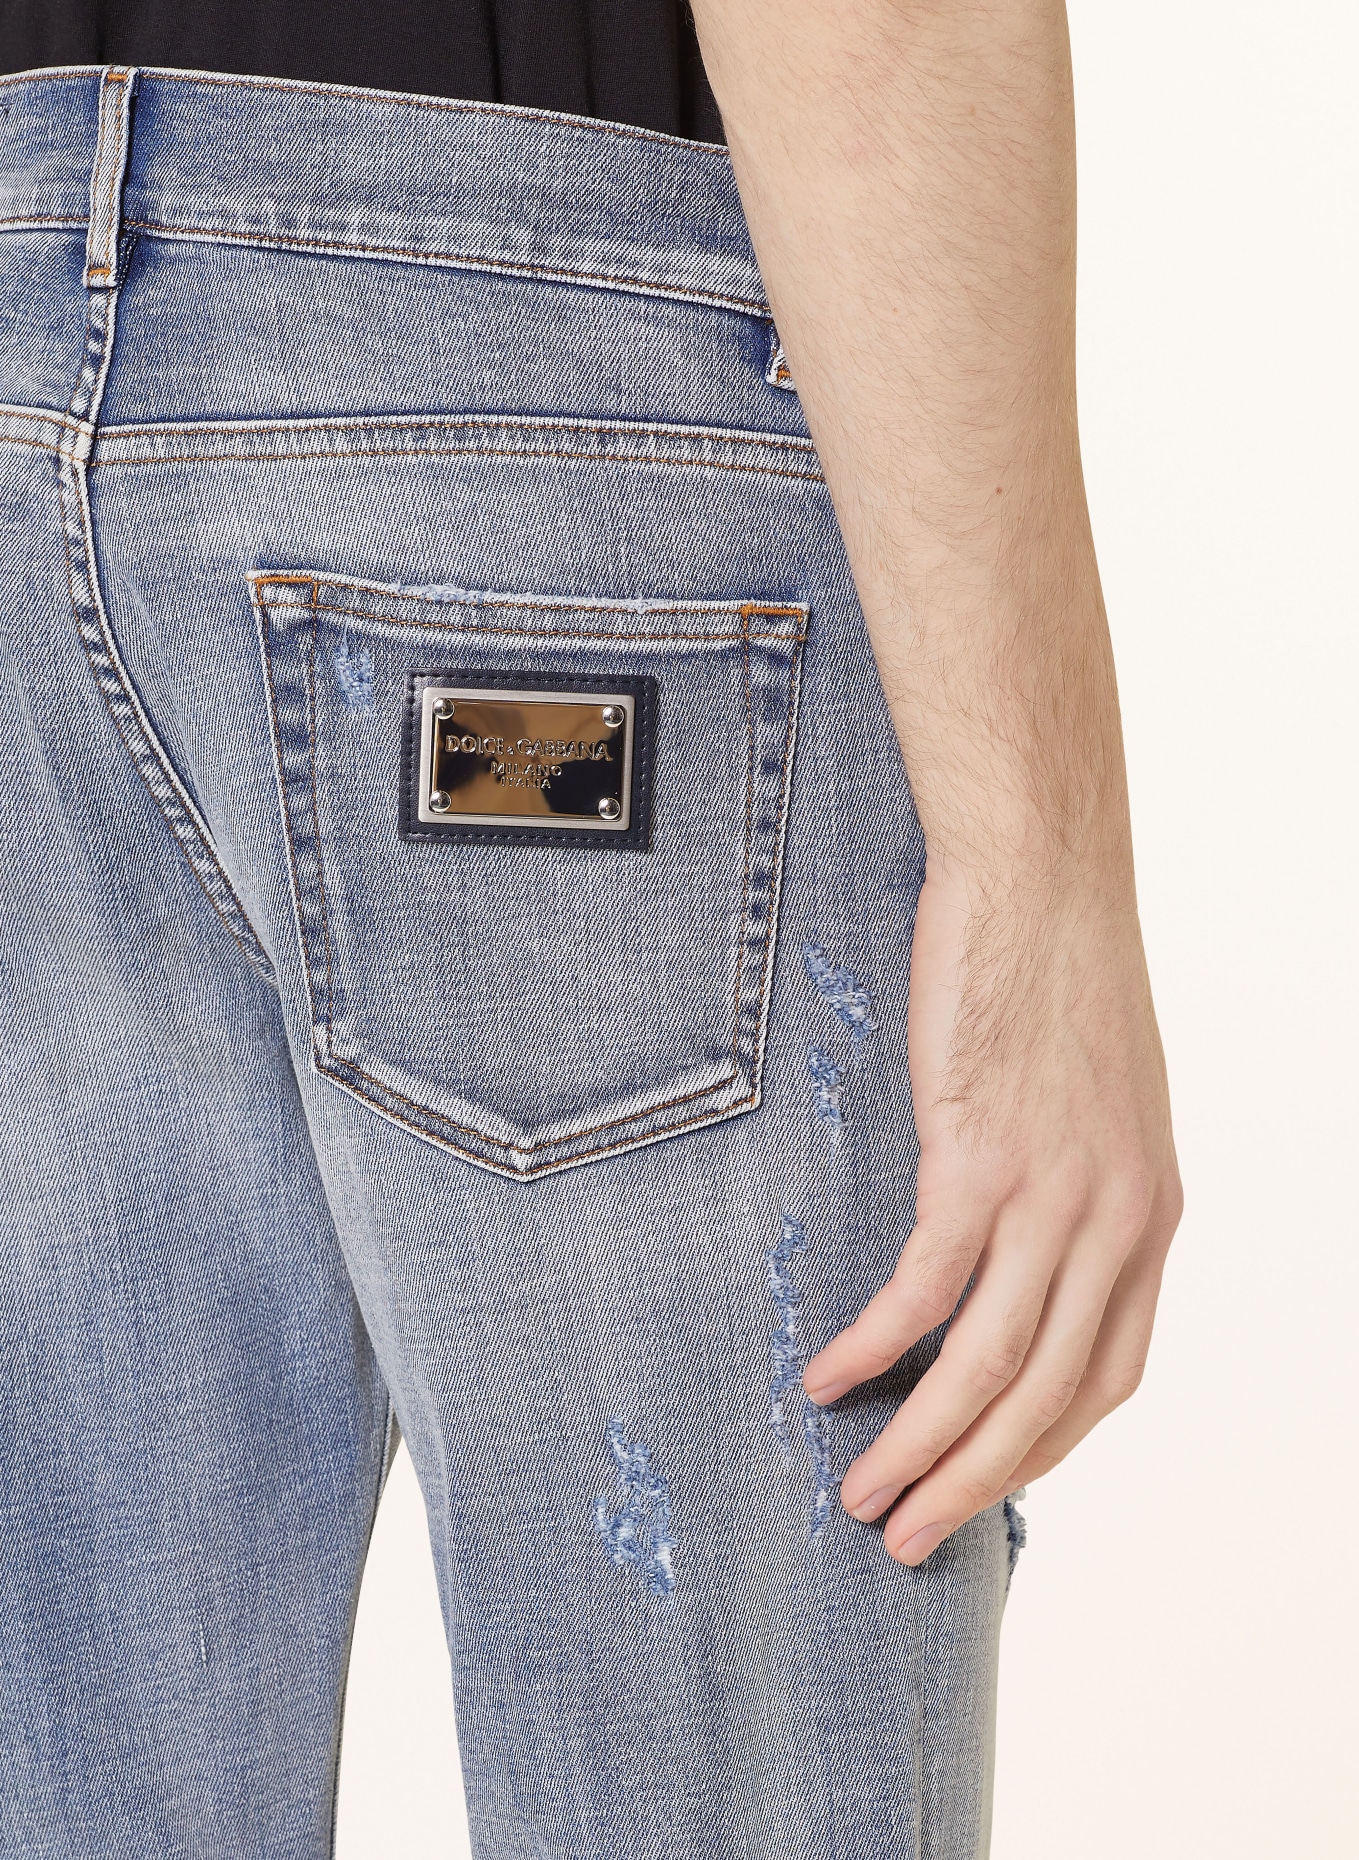 DOLCE & GABBANA Jeans slim fit, Color: S9001 VARIANTE ABBINATA (Image 6)